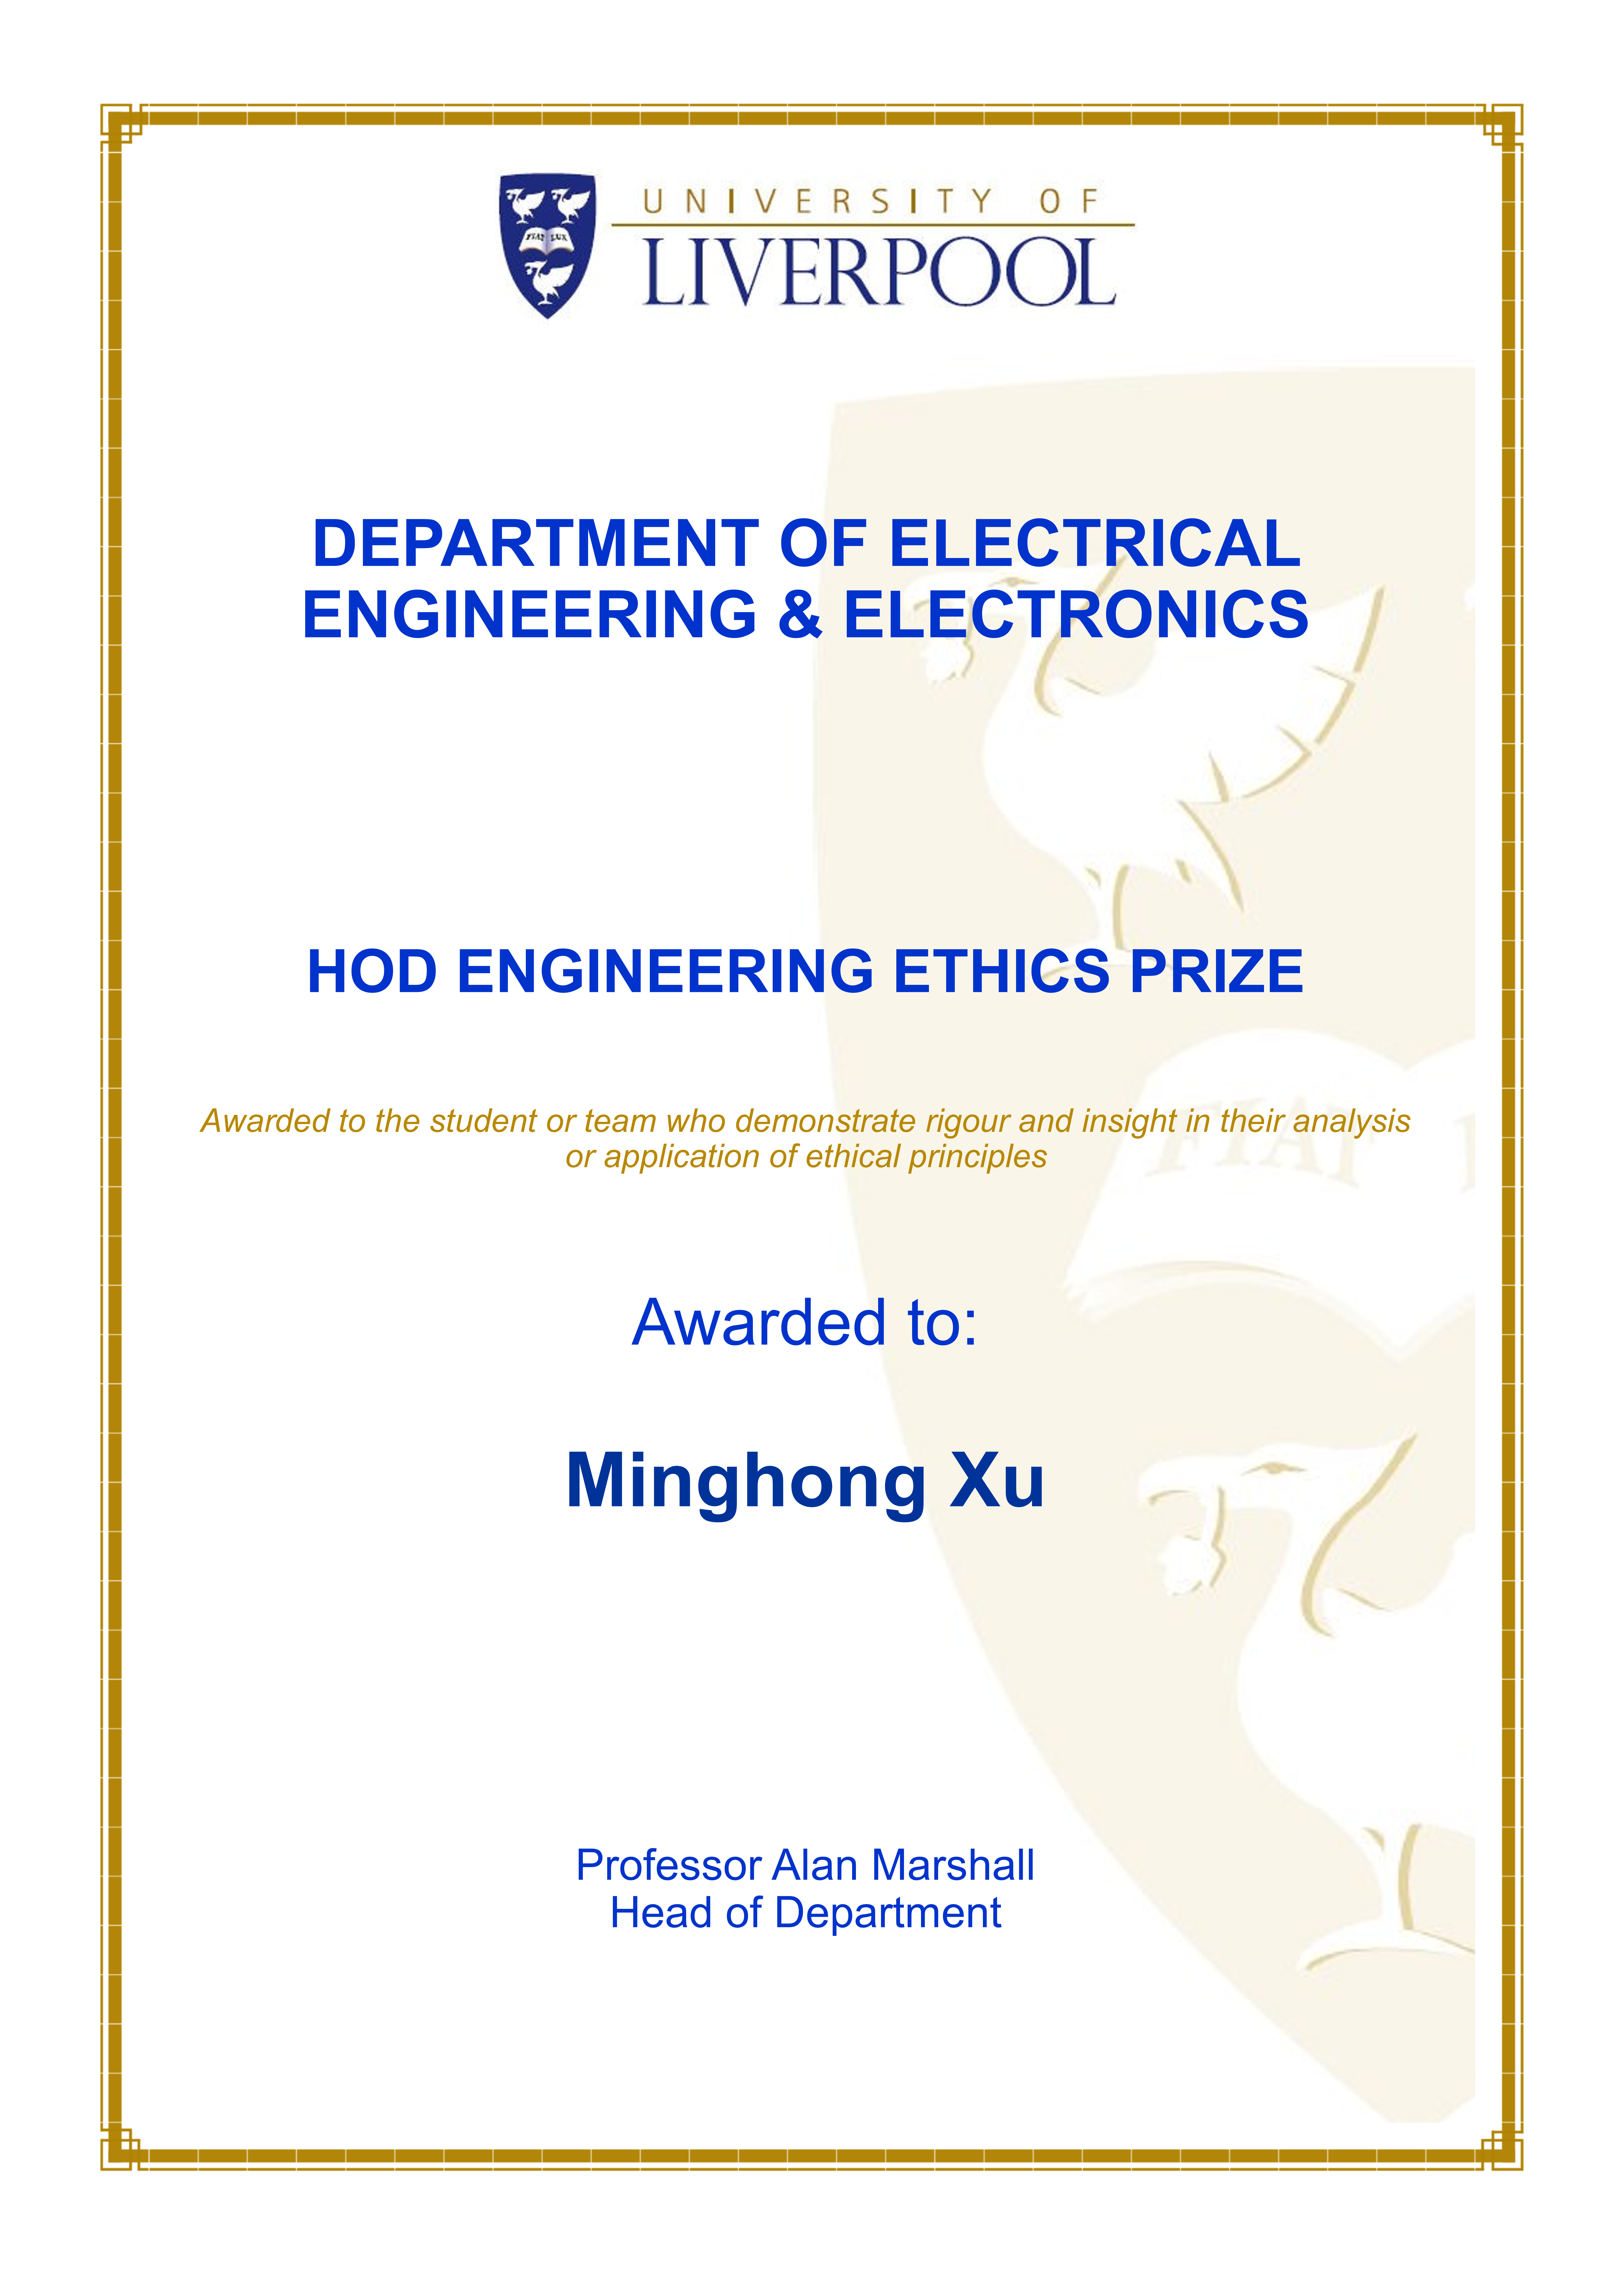 HoD Engineering Ethics Prize (Minghong Xu - 22.23)